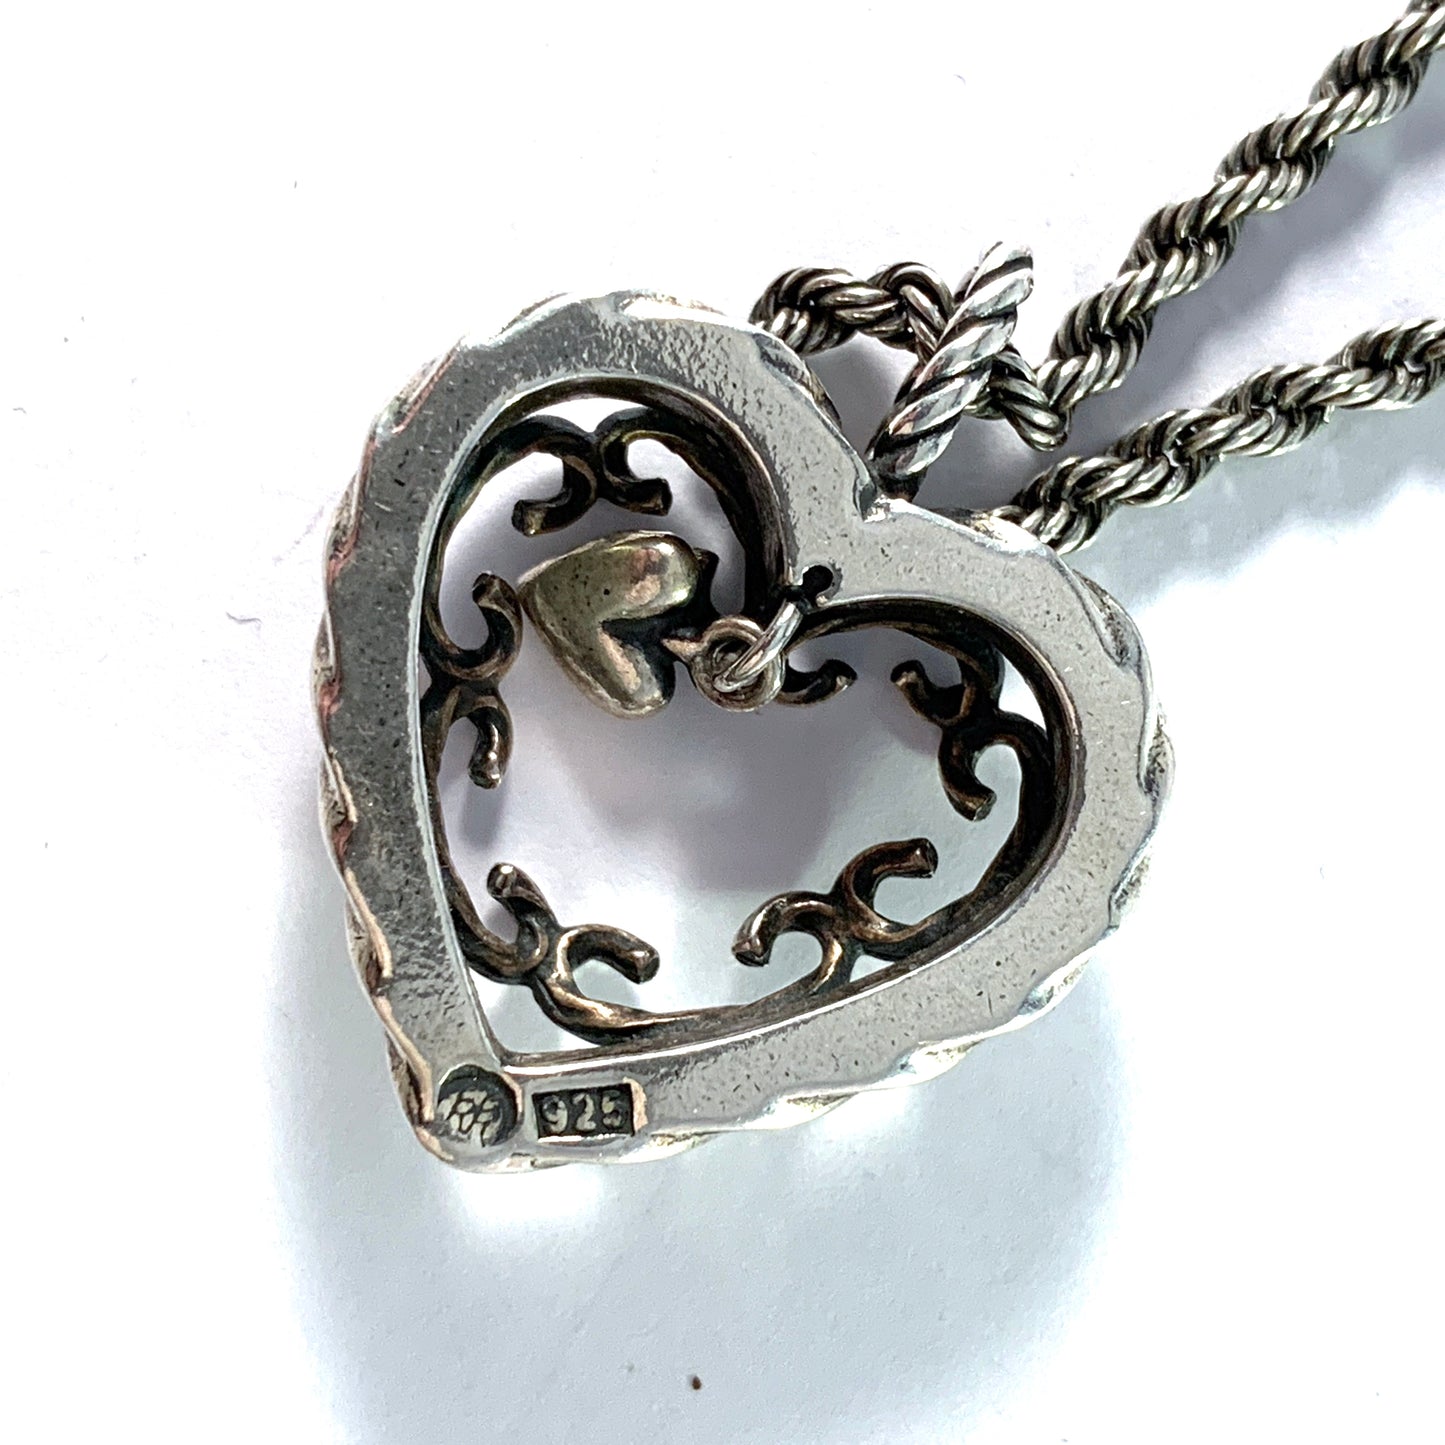 Kalevala Koru, Finland. Vintage Sterling Silver "Heart in Heart" Pendant Necklace.